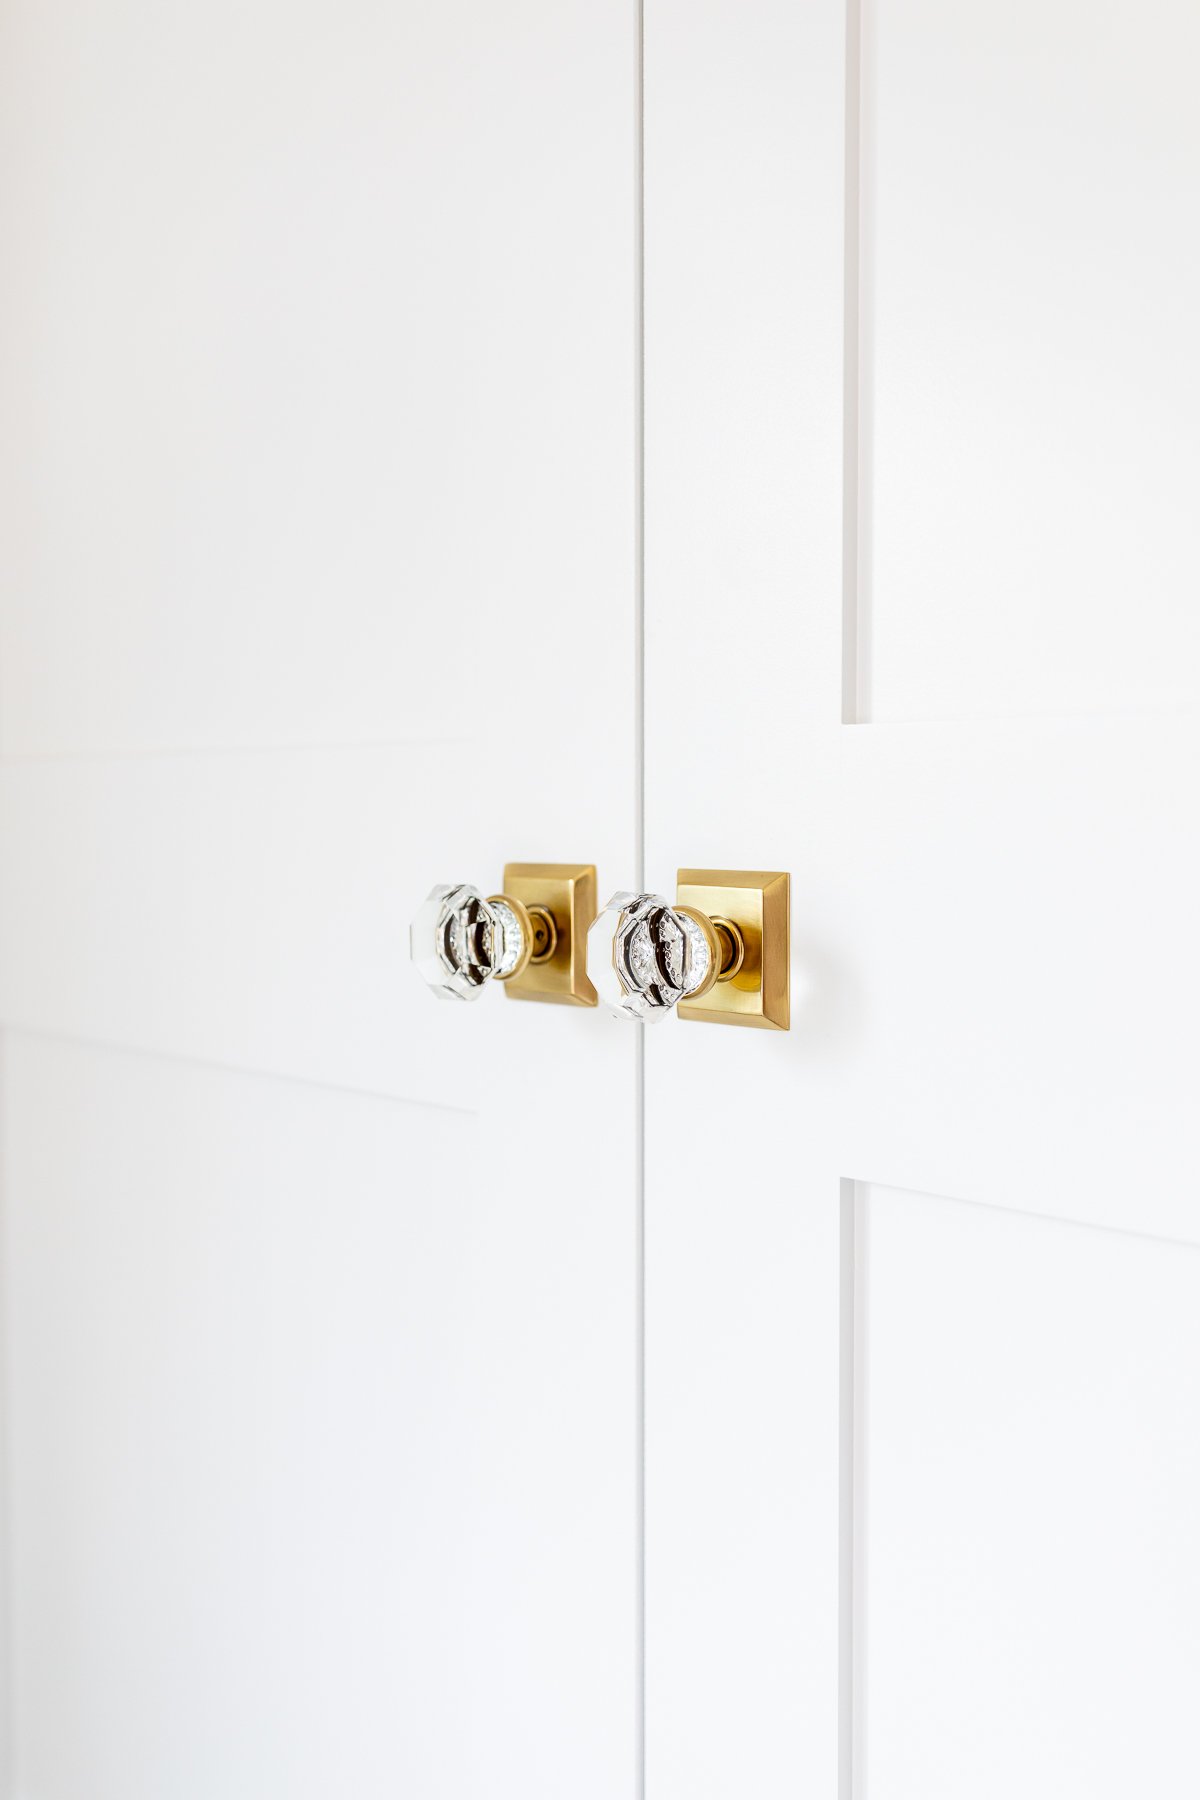 A pair of white shaker closet doors with brass door knobs.